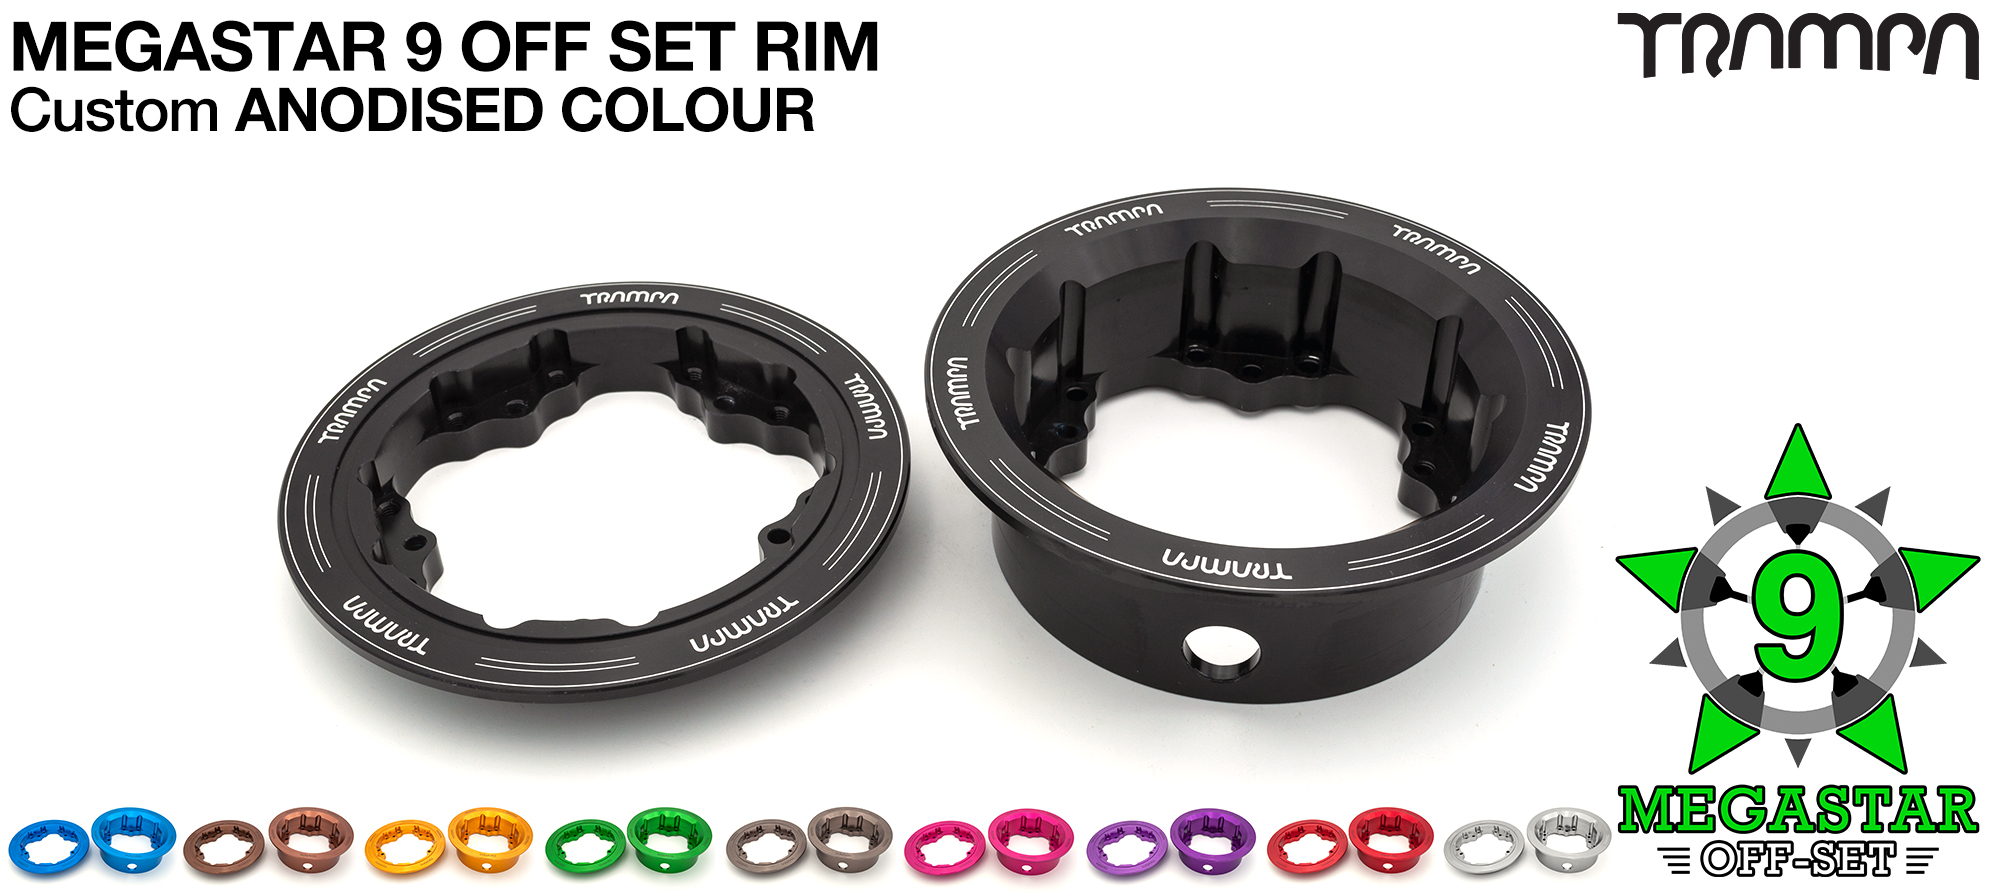 MEGASTAR 9 Rims Measure 3.75/4x 2.5 Inch & accept 3.75 & 4 Inch Rim Tyres